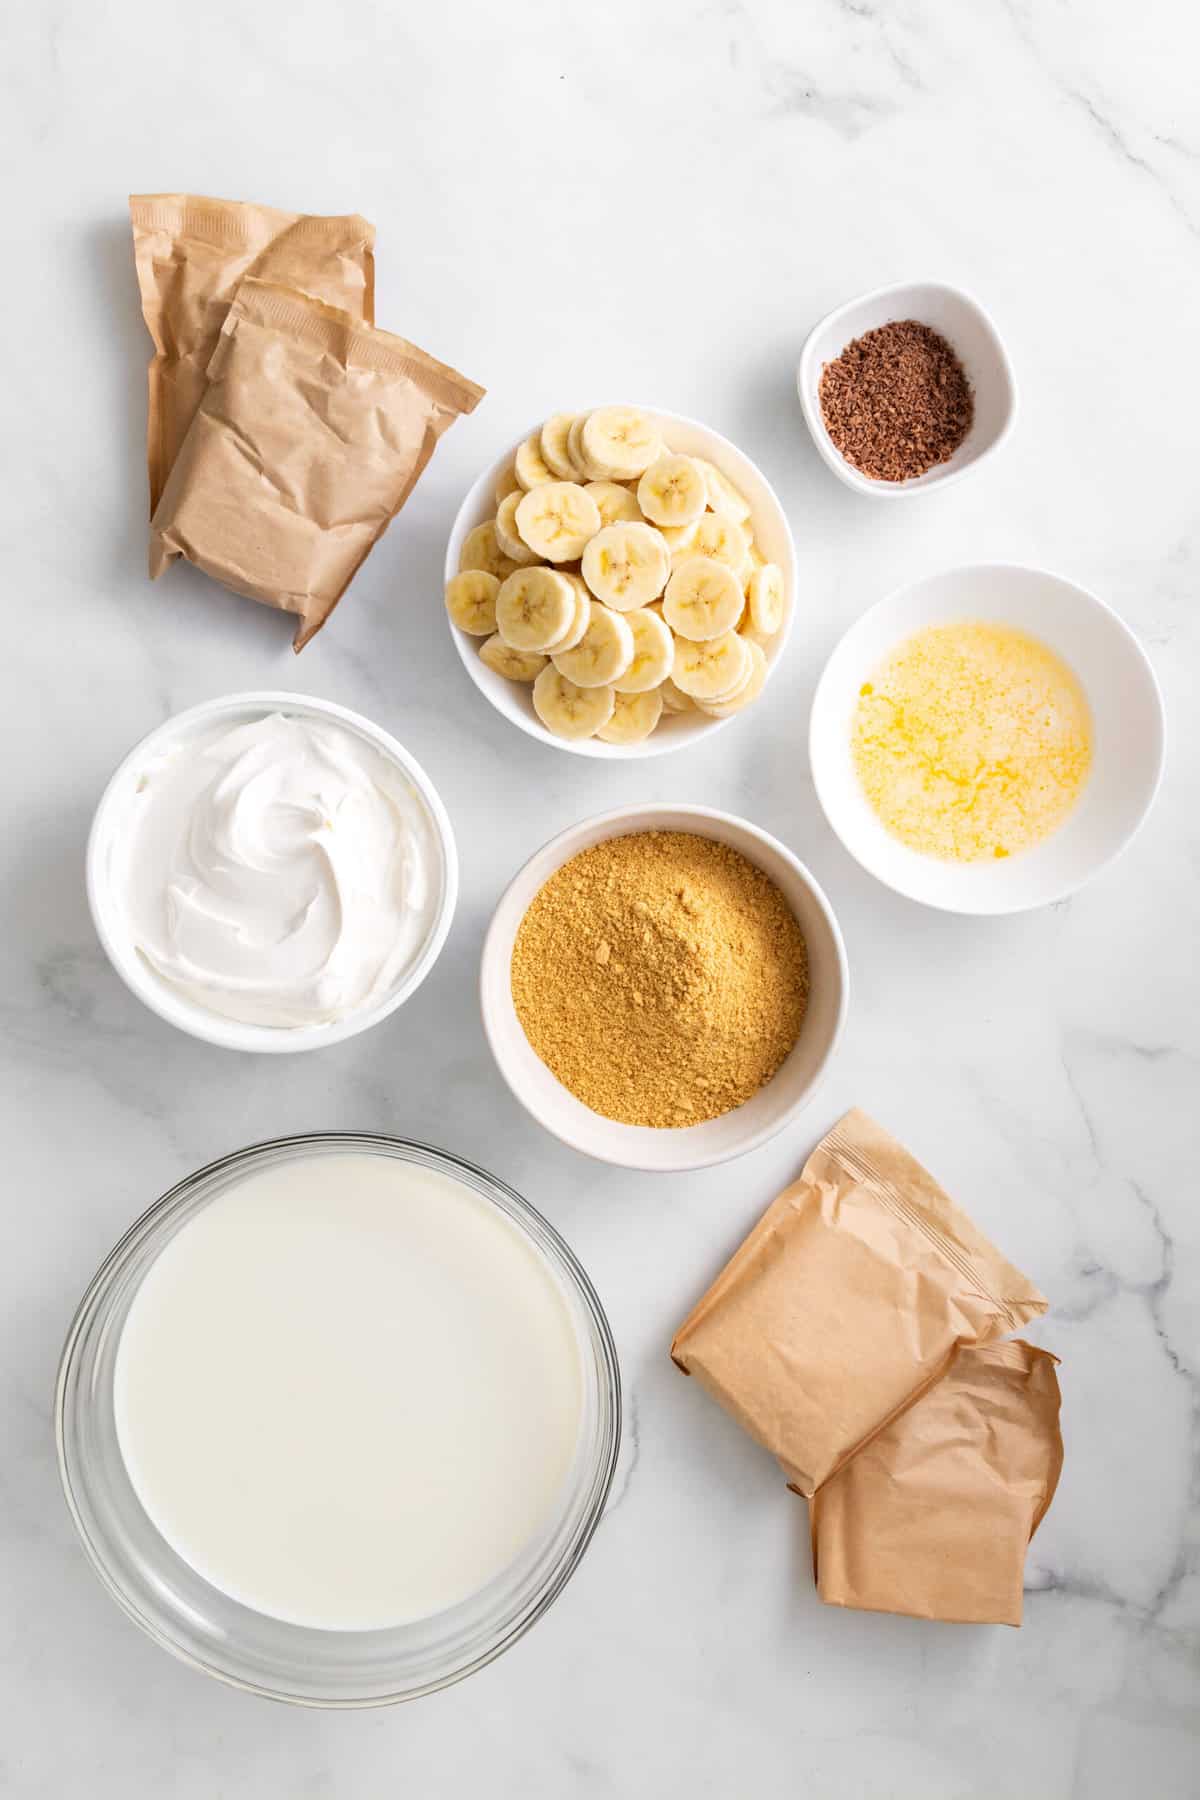 ingredients to make chocolate banana puddings bars